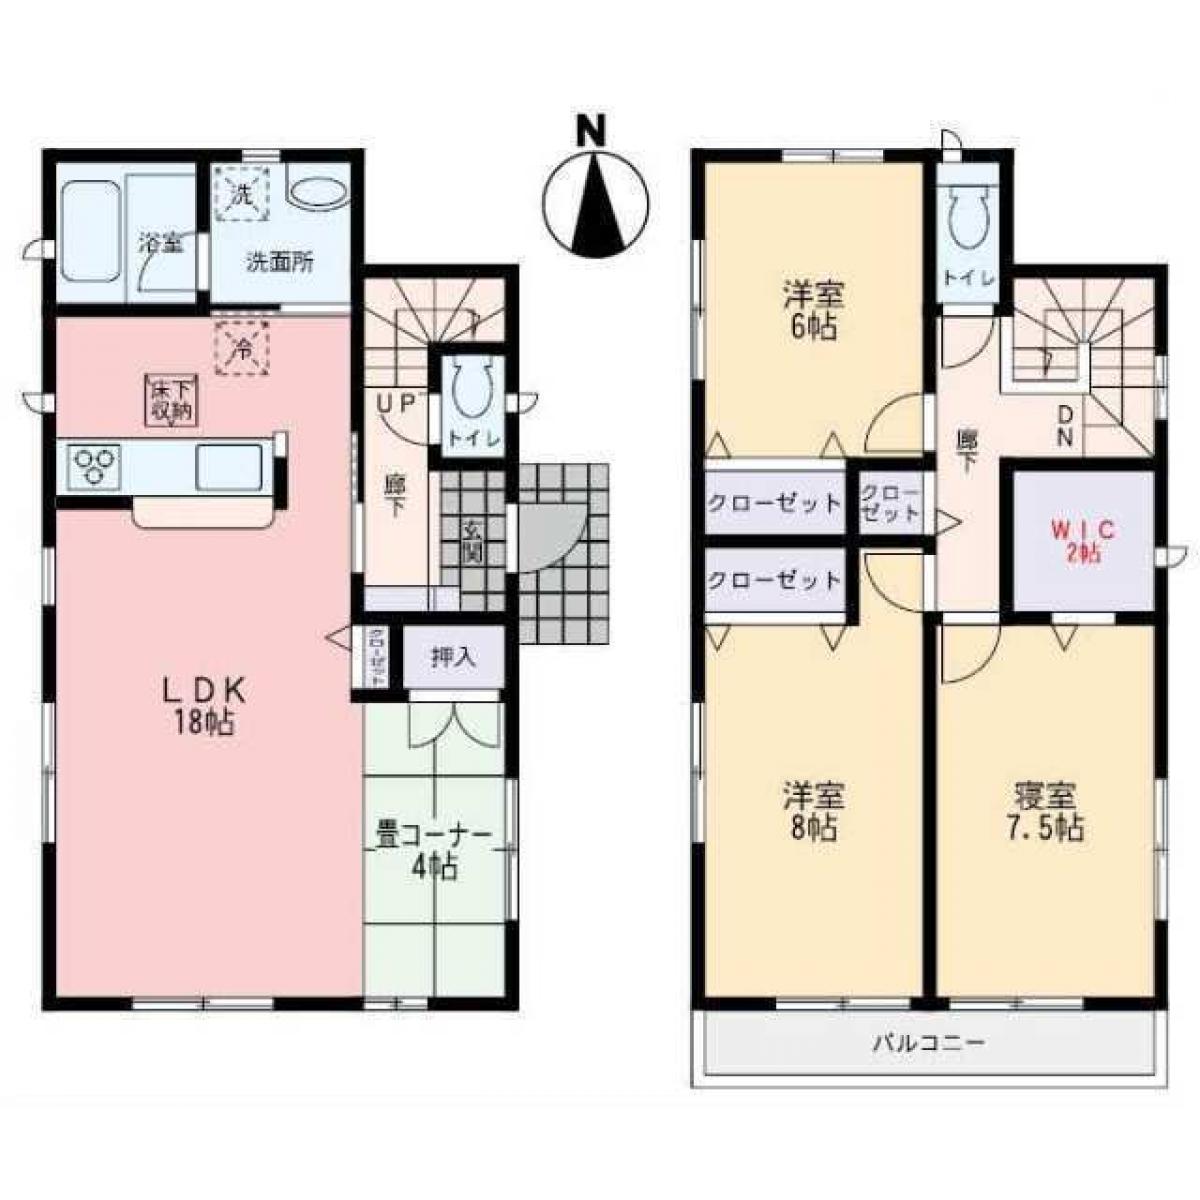 Picture of Home For Sale in Fukuoka Shi Higashi Ku, Fukuoka, Japan